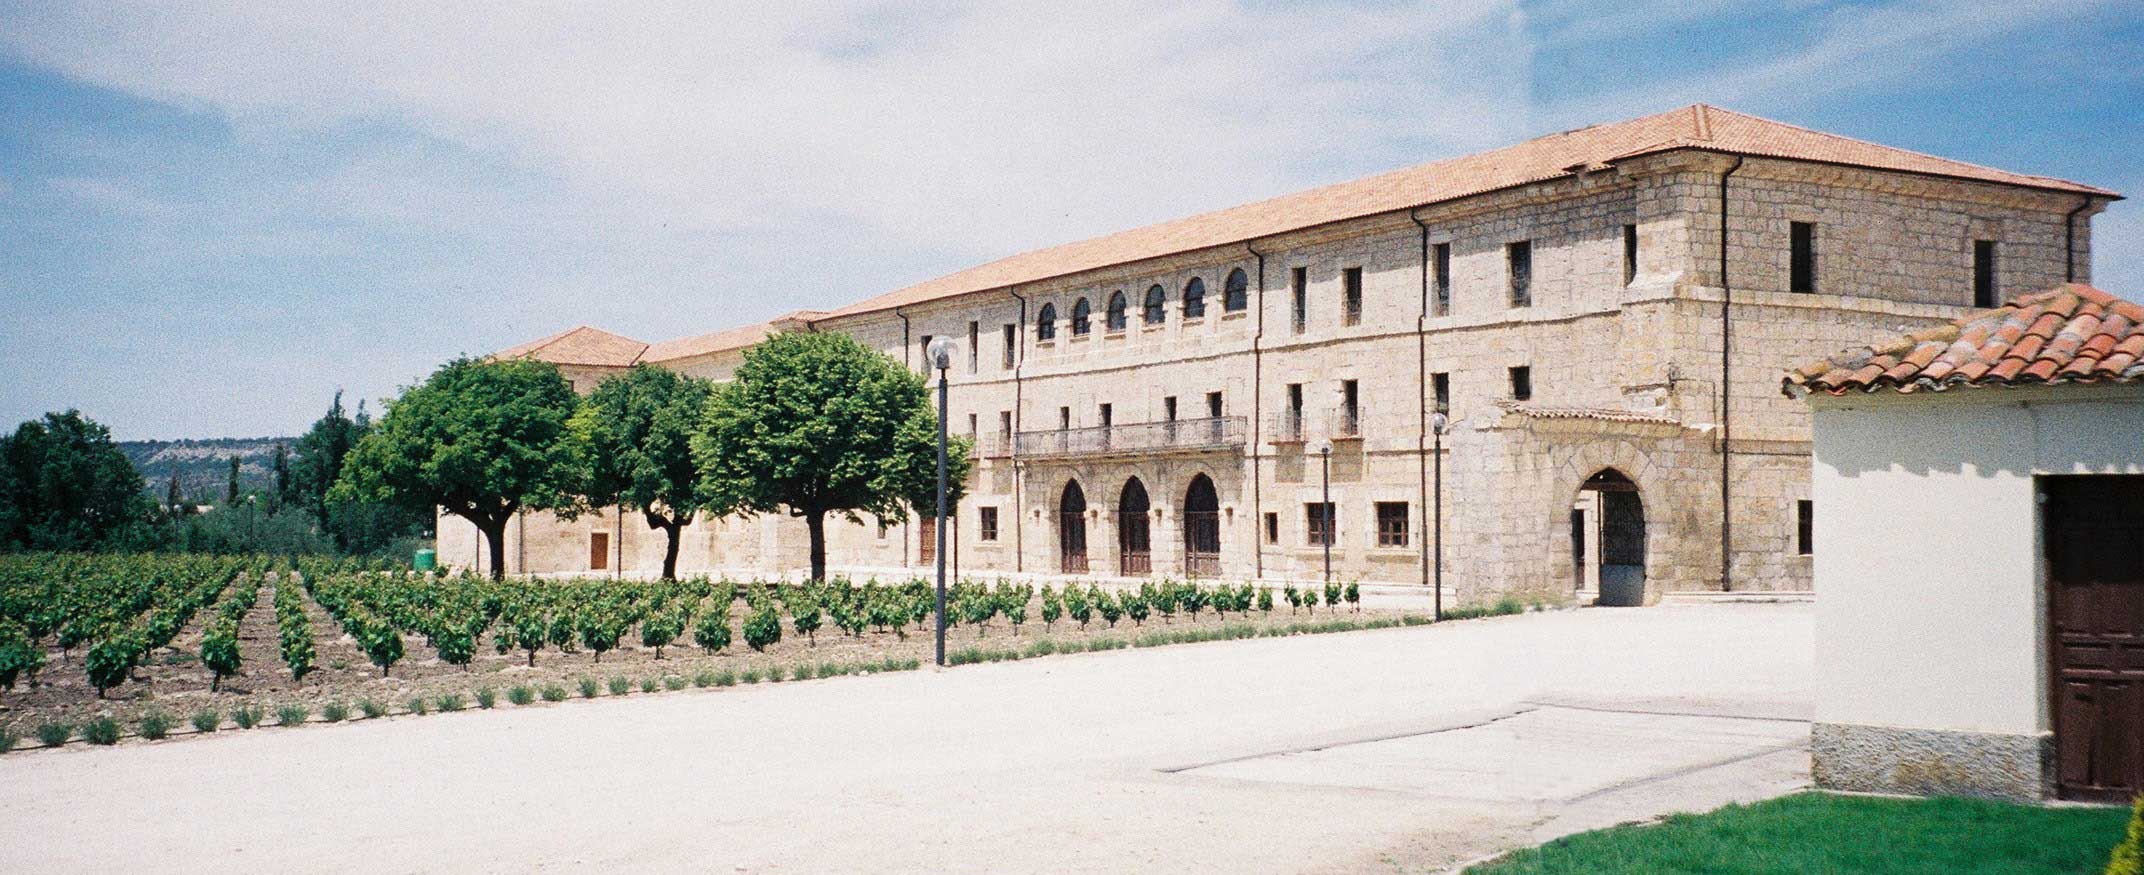 The monastery of Santa María de Retuerta (photo copyright Andrew Stevenson)